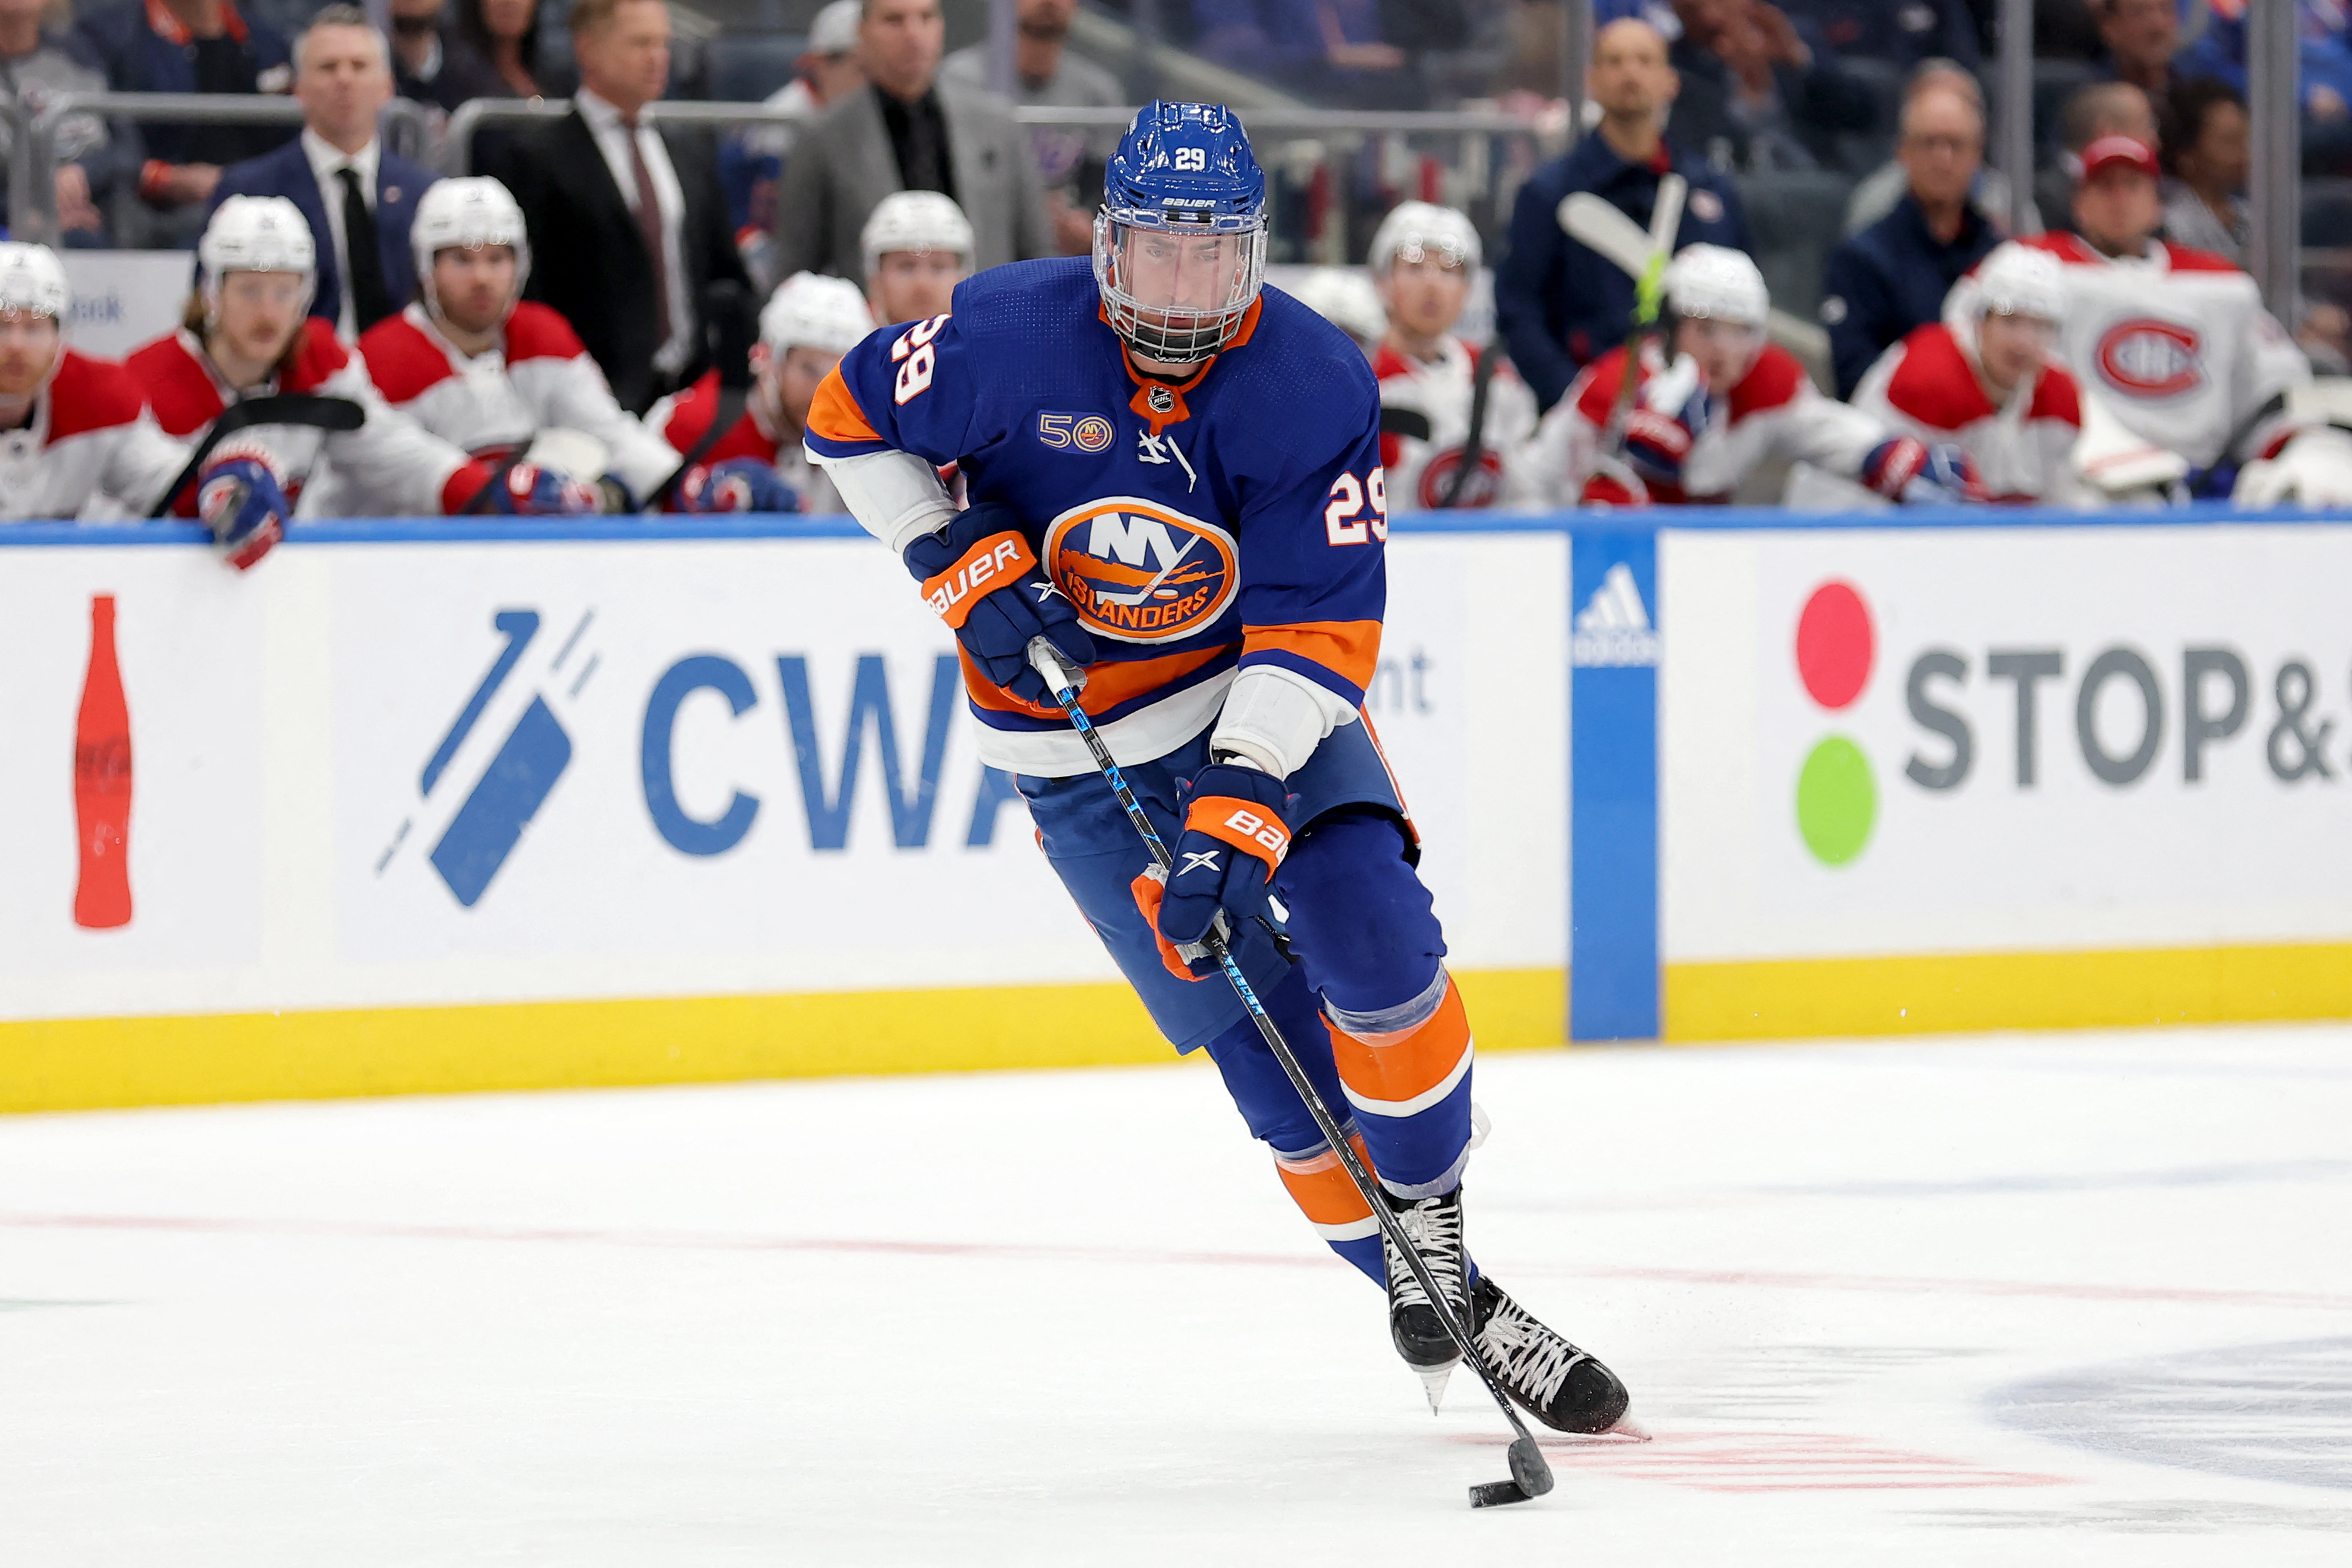 NHL roundup: Stars goalie Wedgewood beats former team, 4-1